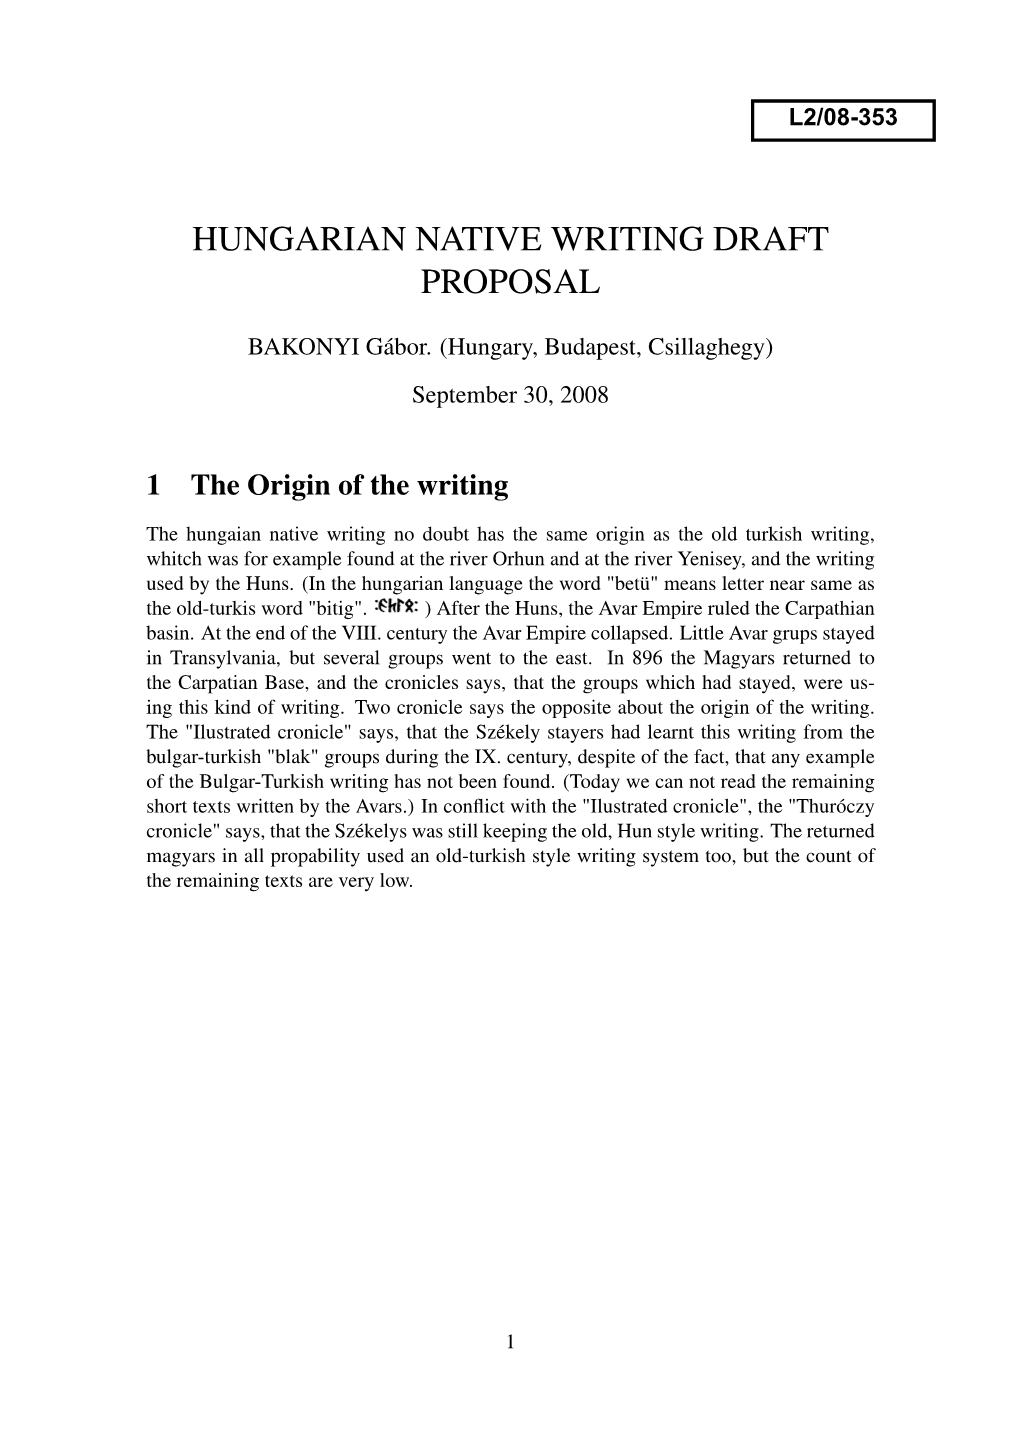 Hungarian Native Writing Draft Proposal